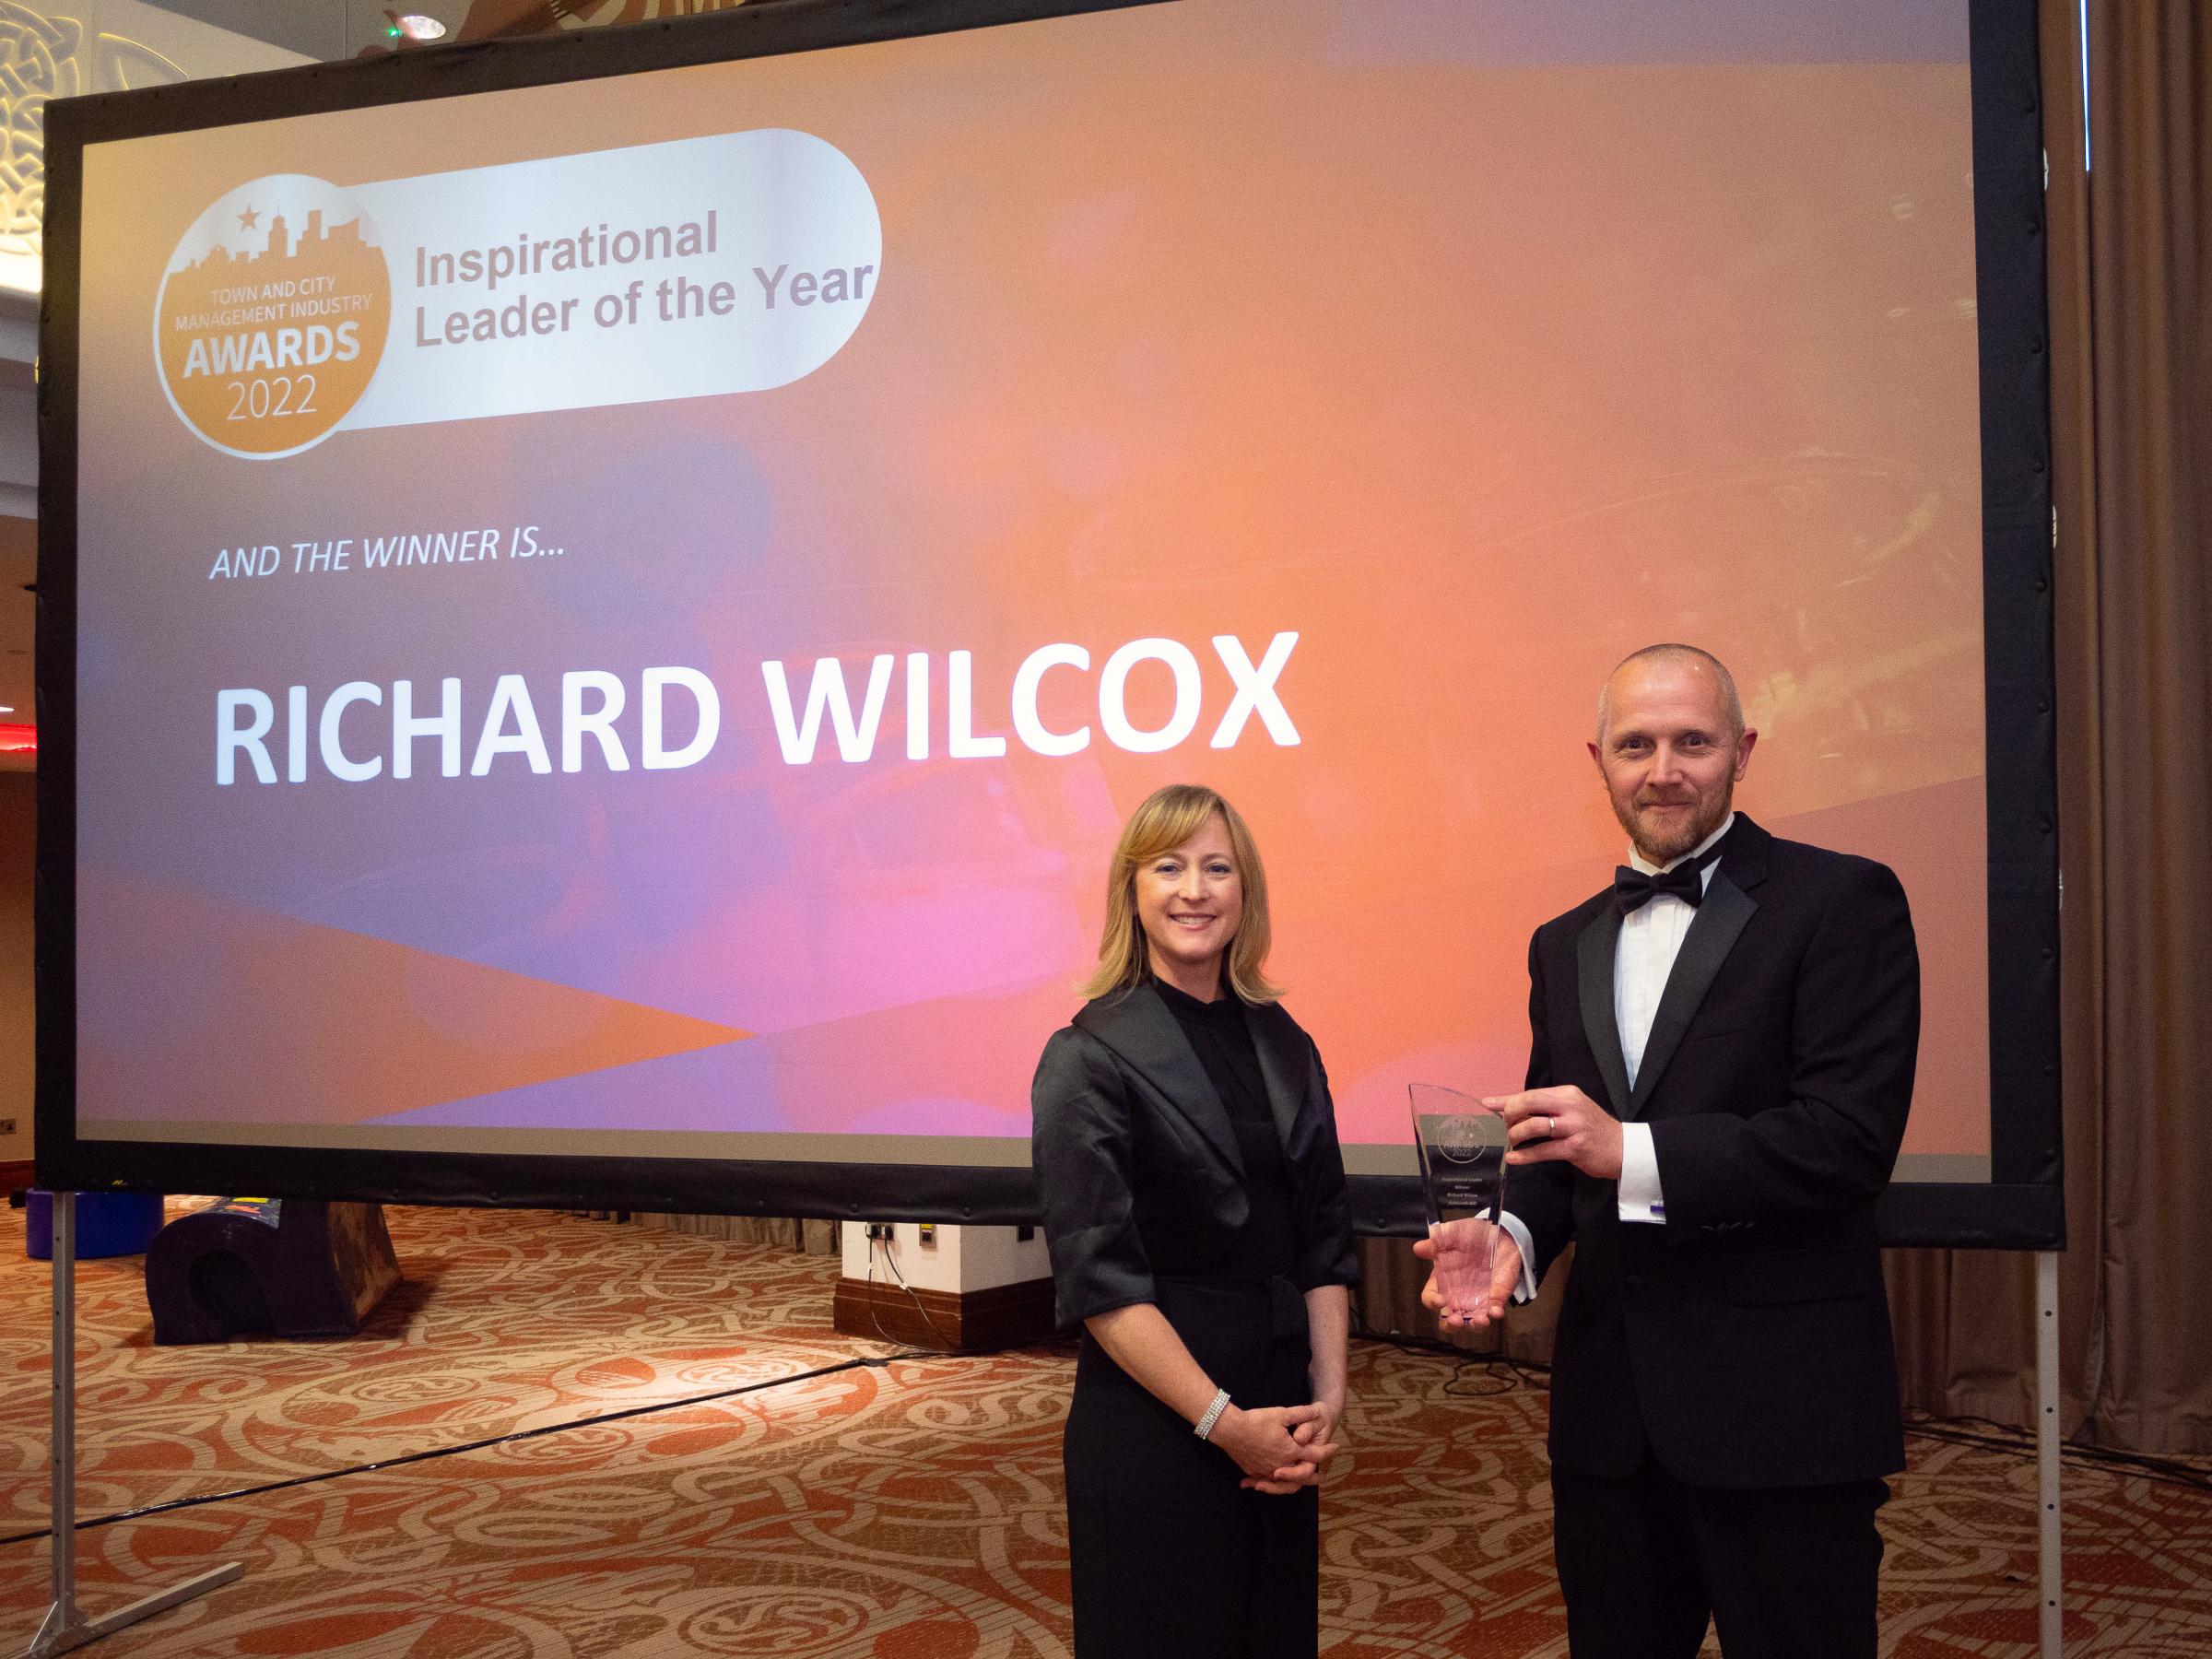 Richard Wilcox winning Inspirational Leader of the Year award